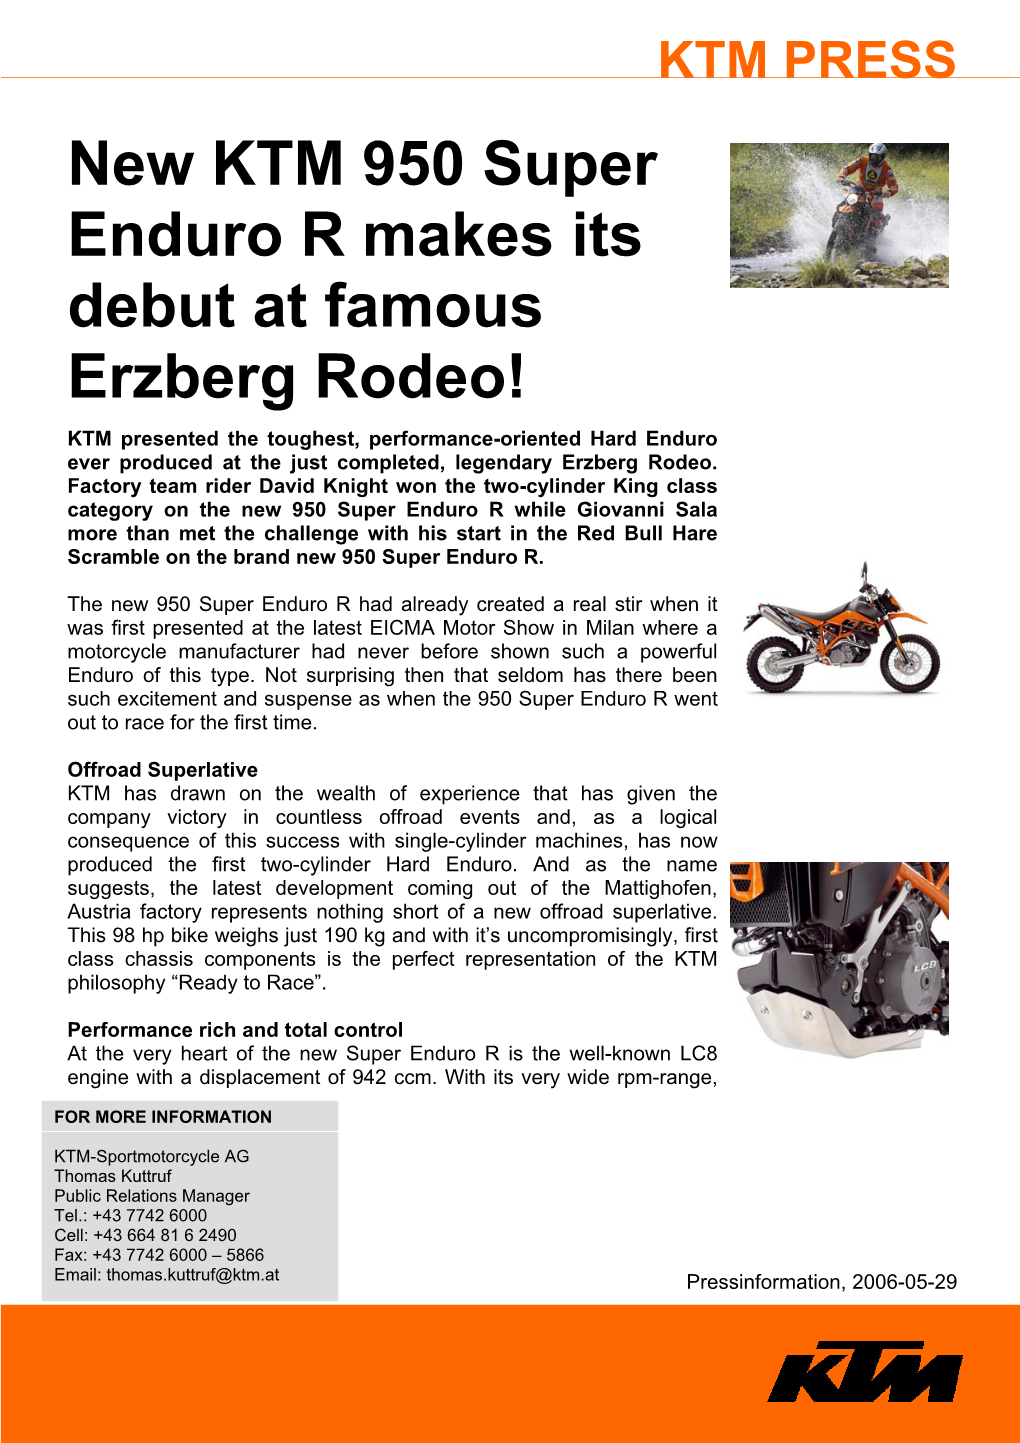 New KTM 950 Super Enduro R Makes Its Debut at Famous Erzberg Rodeo!